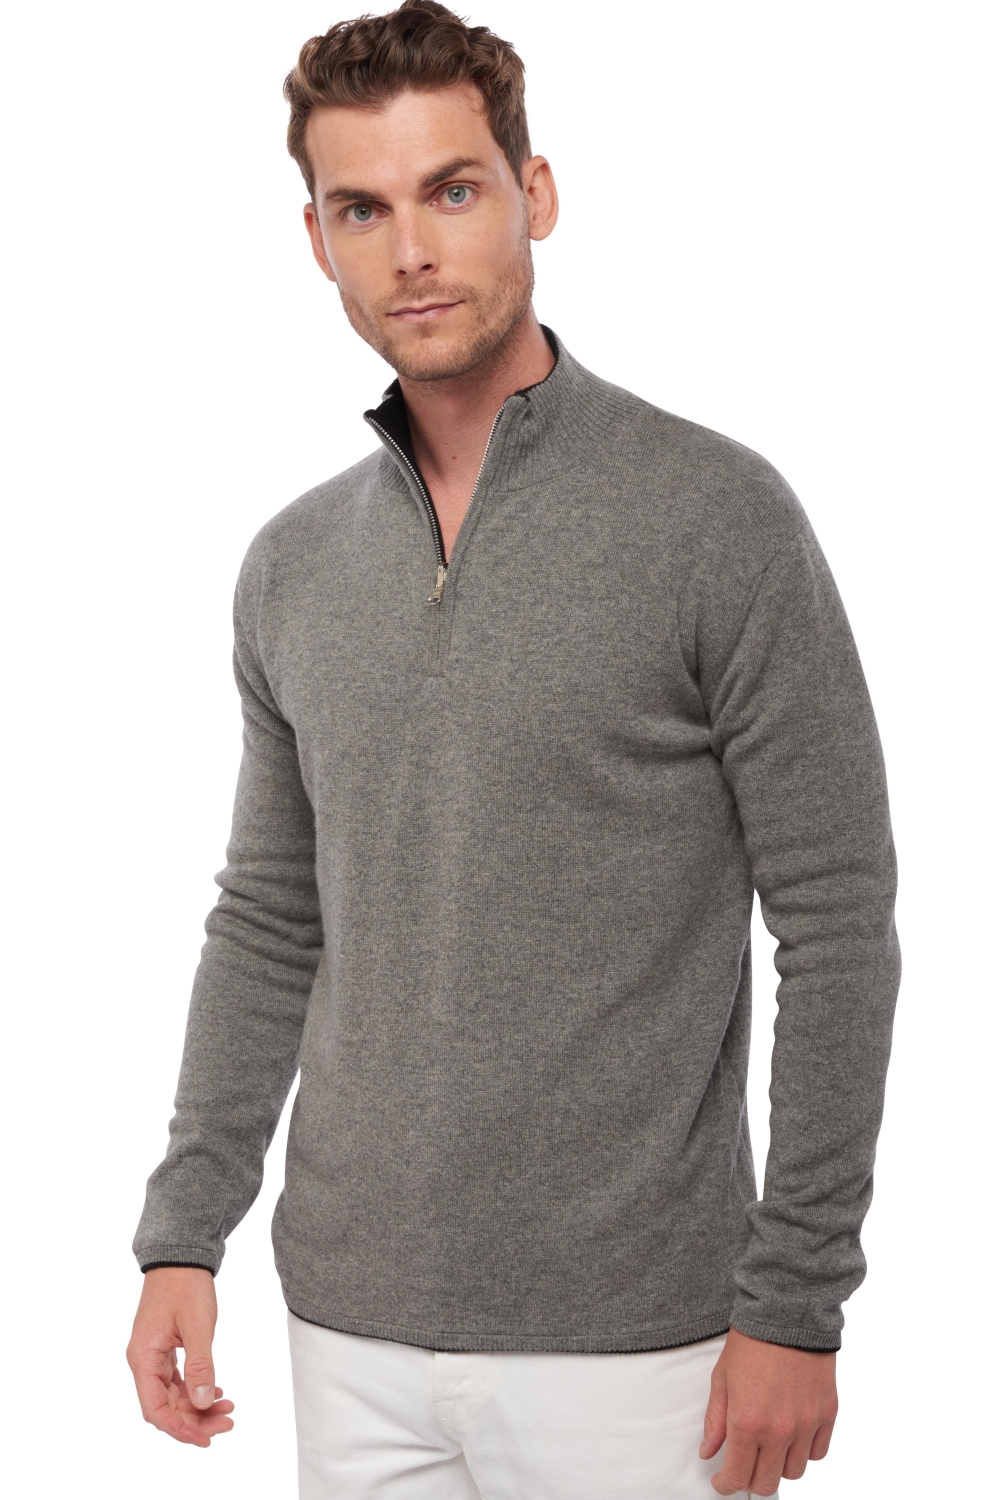 Cashmere men polo style sweaters cilio black grey marl 2xl